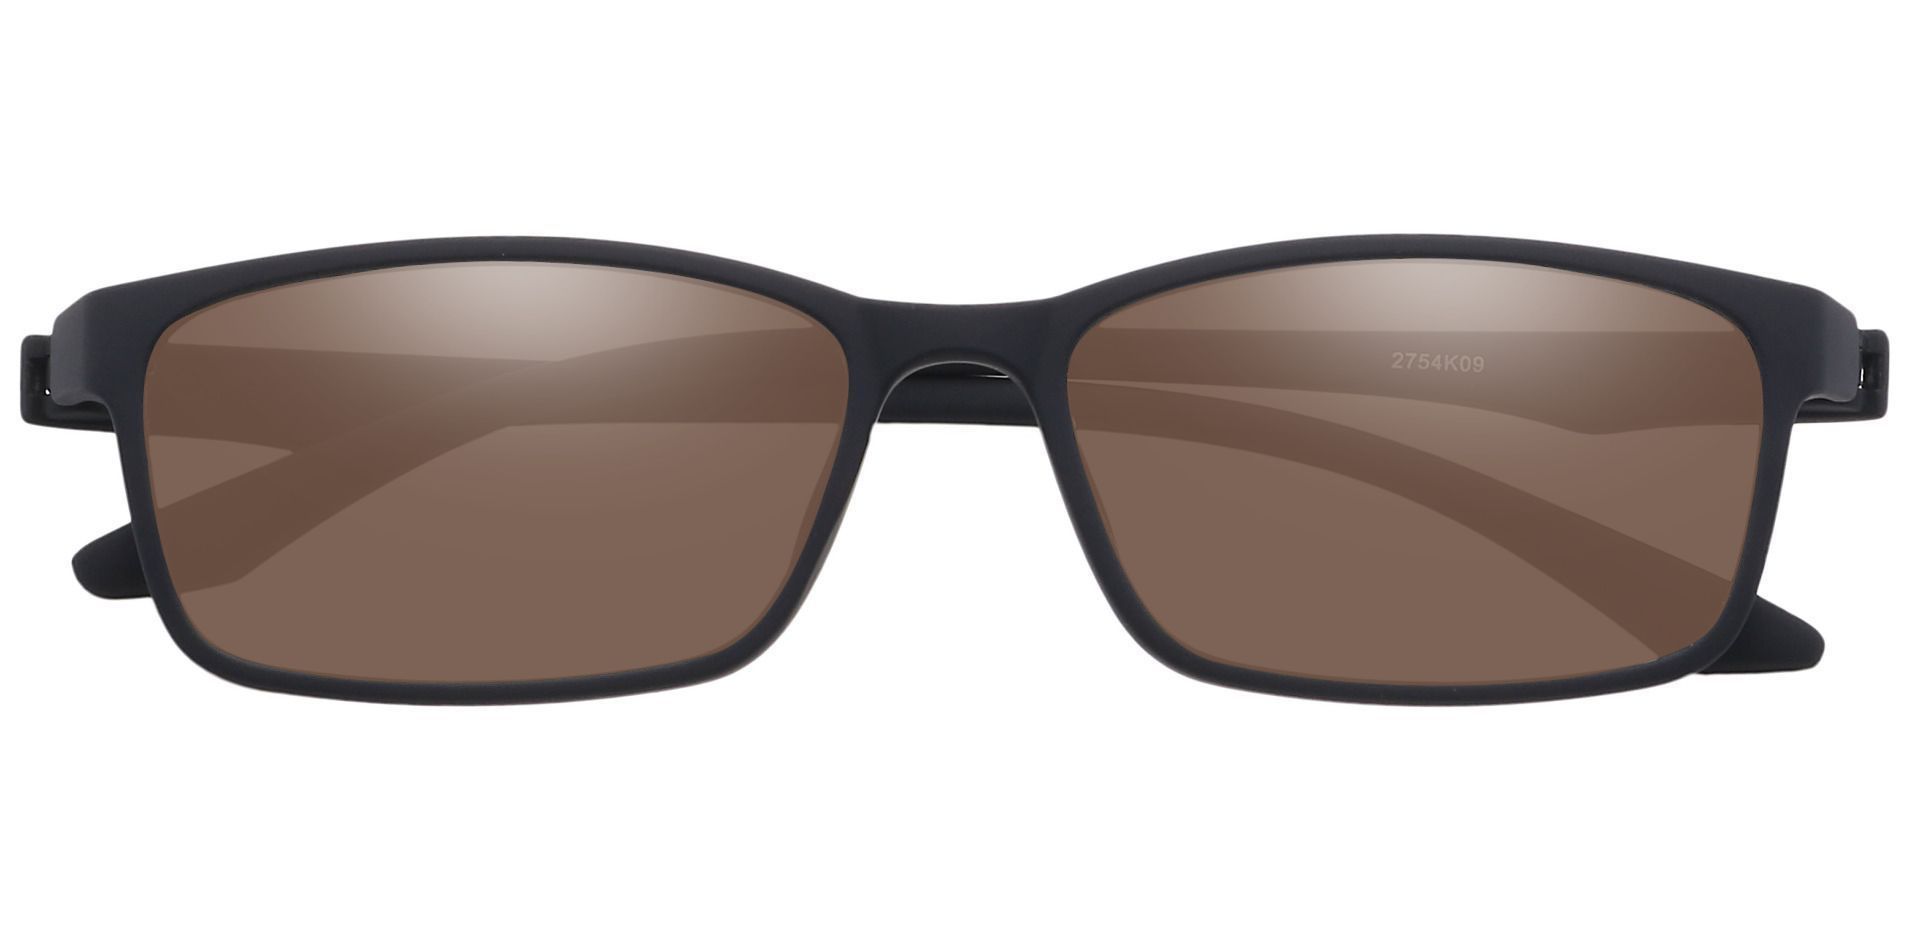 Wichita Rectangle Prescription Sunglasses -  Black Frame With Brown Lenses